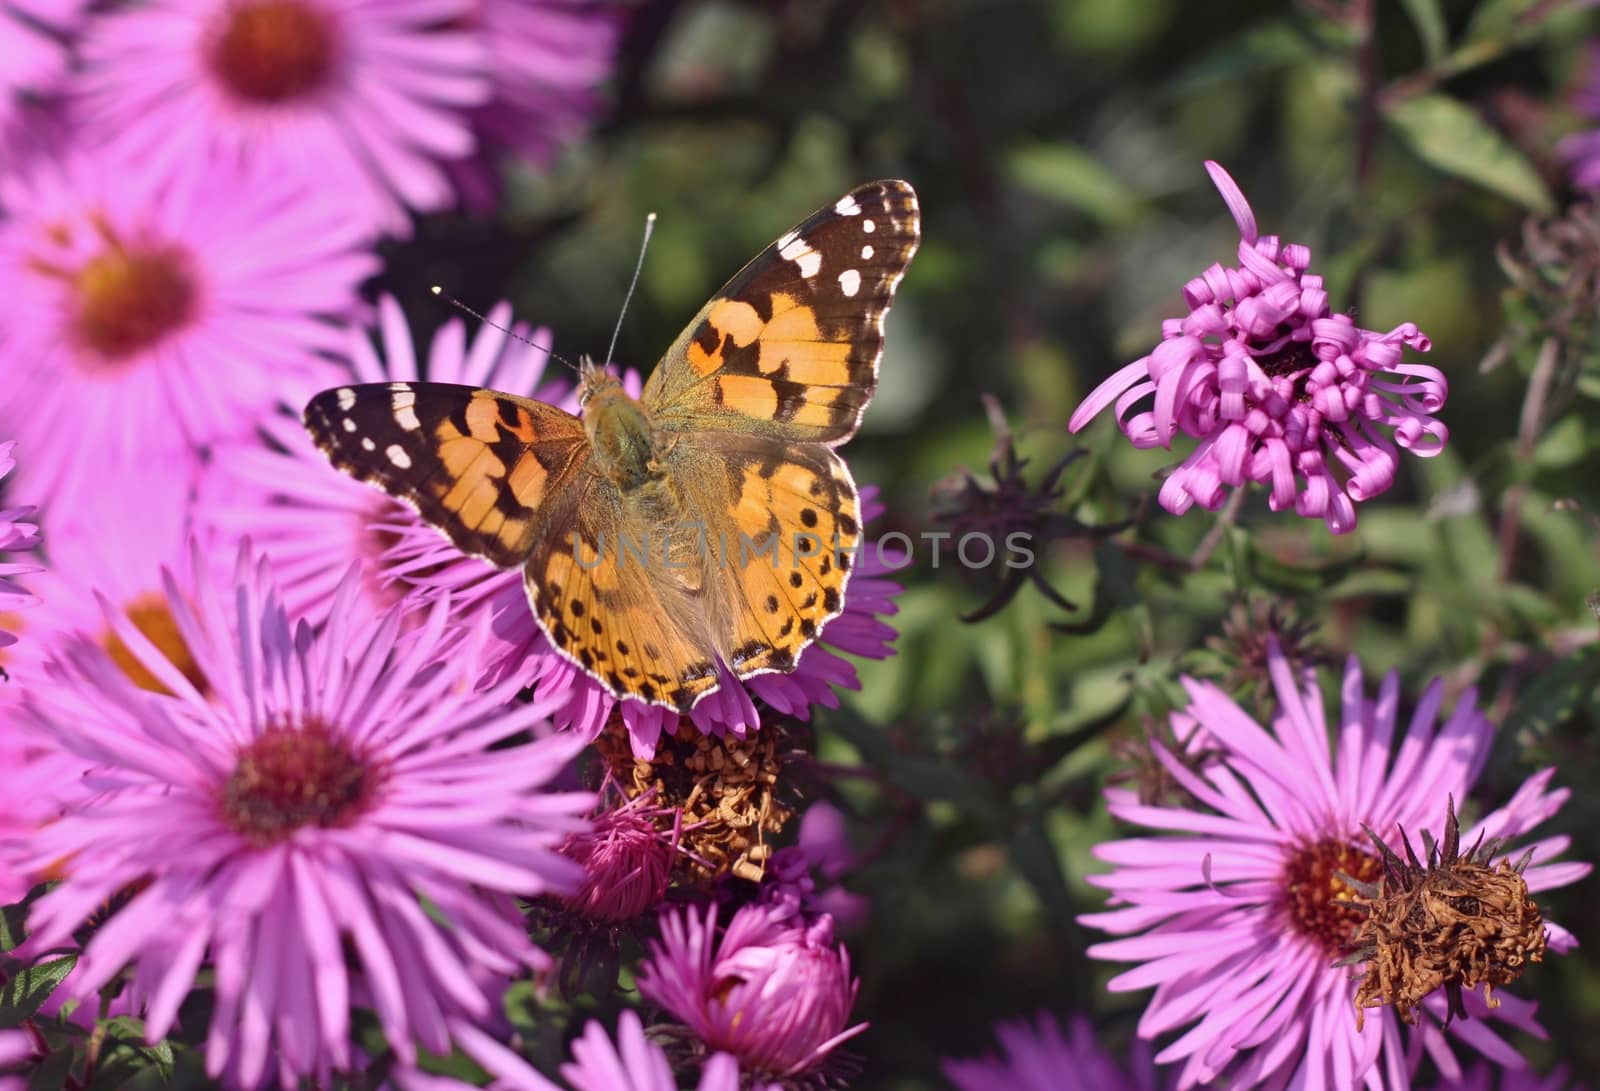 Butterfly on flower of dahlia  by jnerad